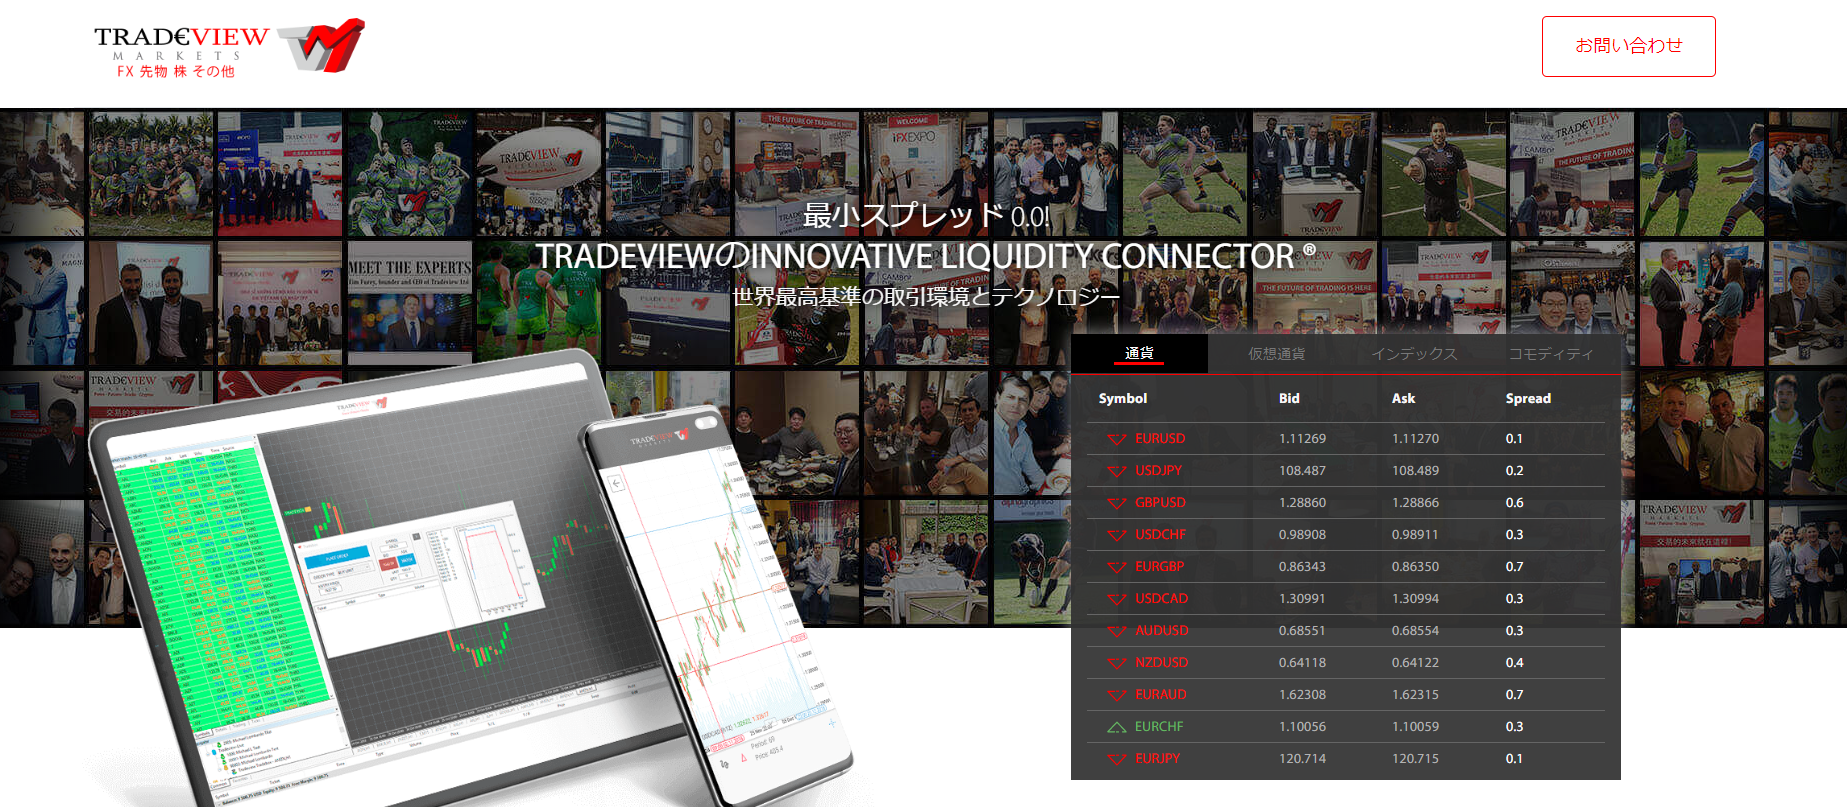 Tradeviewの魅力はスプレッド！人気の理由を解説 - Tradeviewの公式サイト